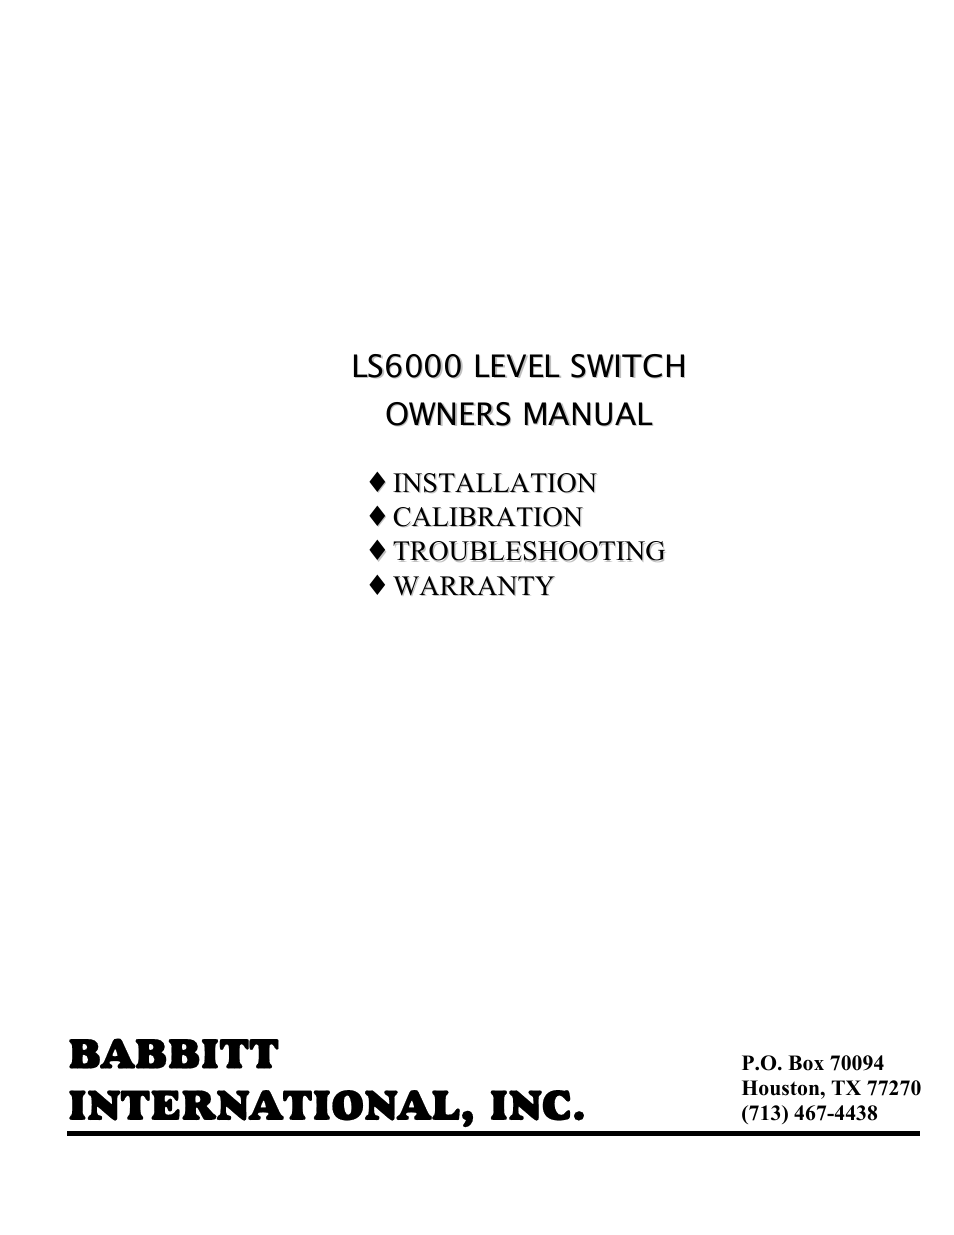 LS6000 Basic Features Sensor